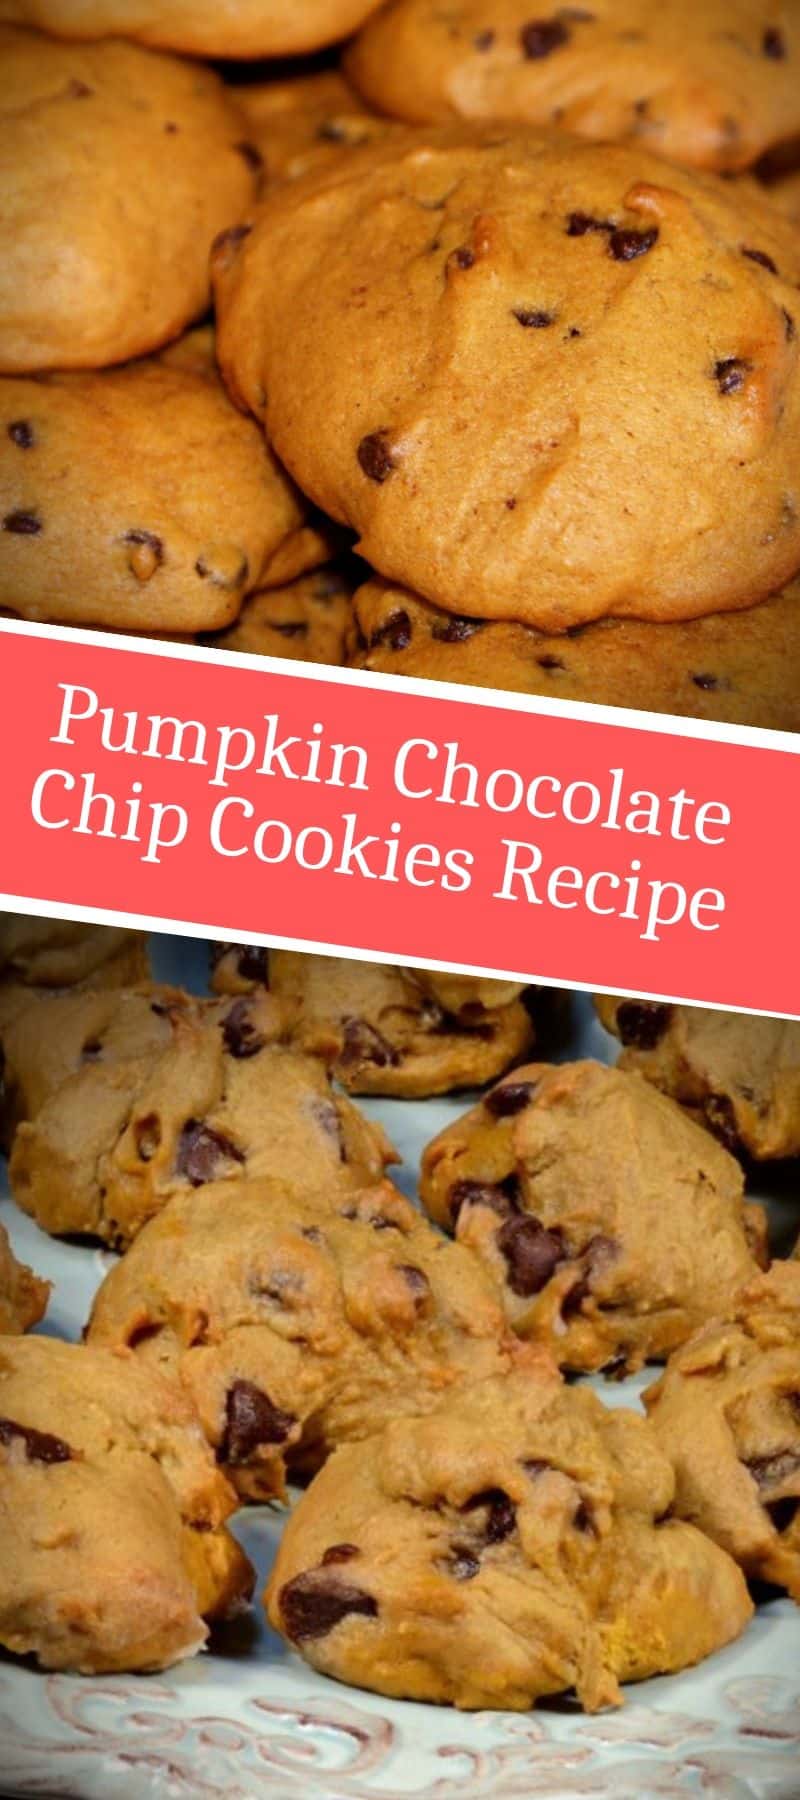 Pumpkin Chocolate Chip Cookies Recipe 3